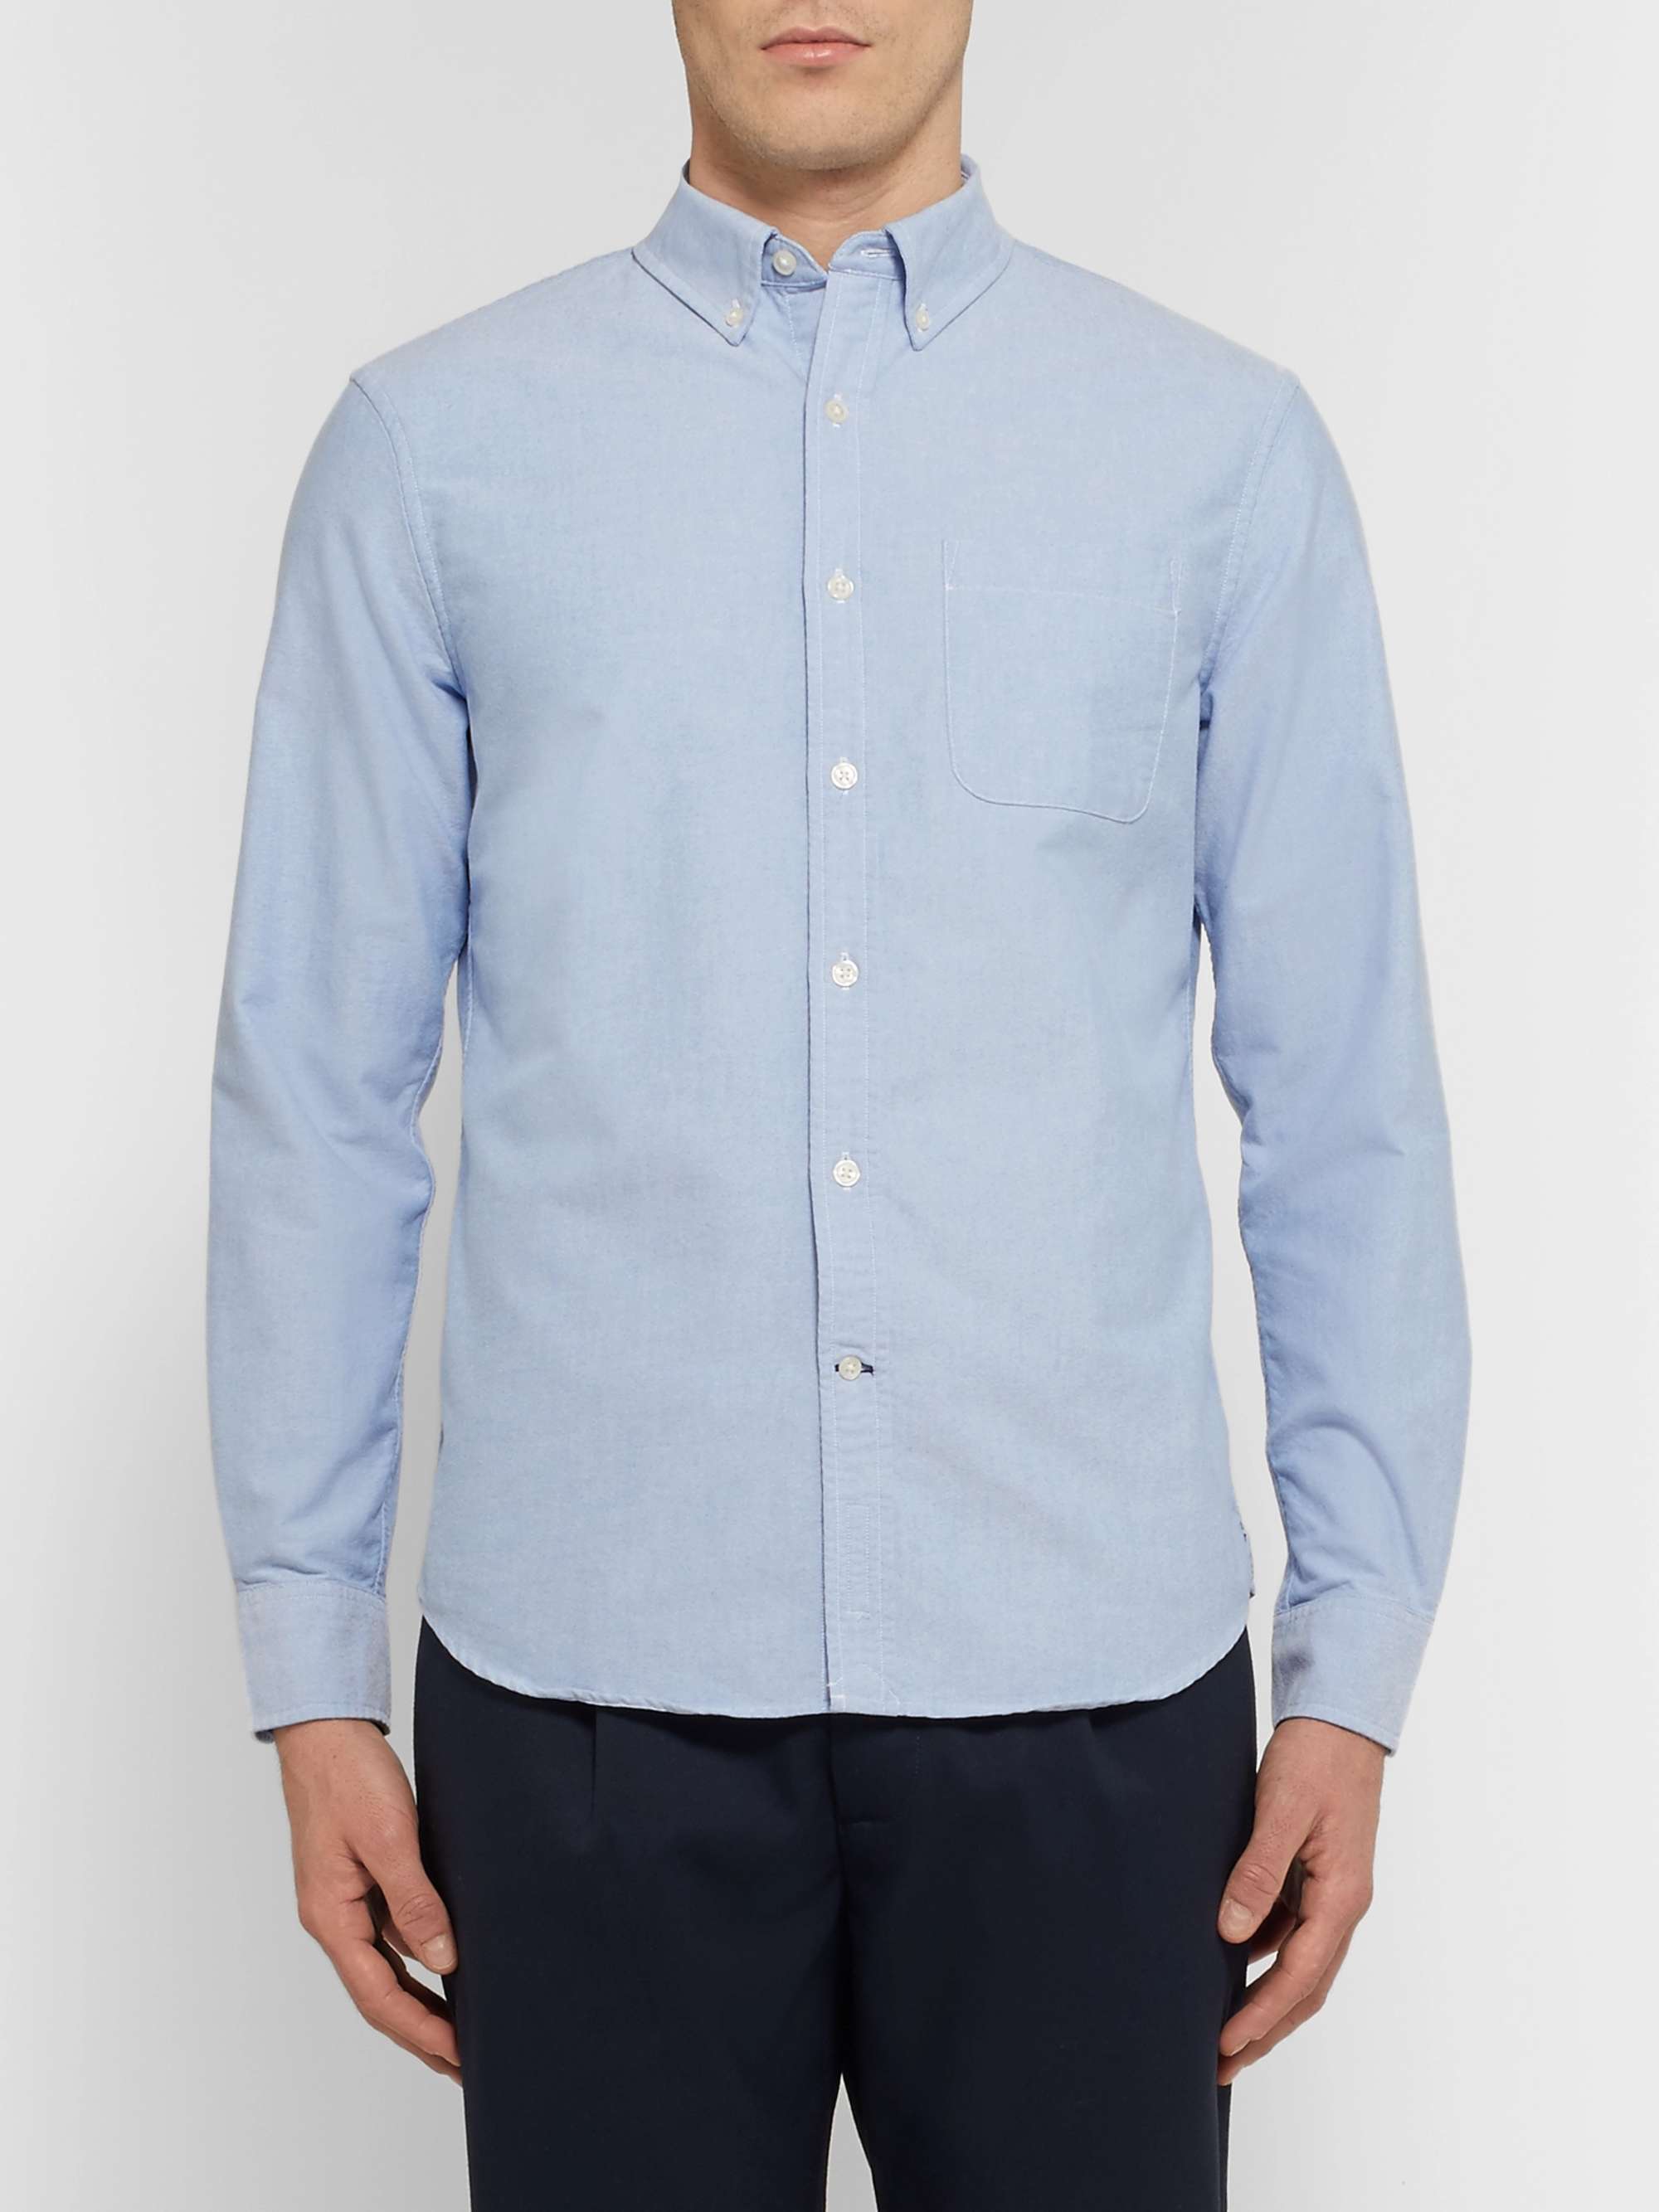 CLUB MONACO Button-Down Collar Cotton Oxford Shirt for Men | MR PORTER